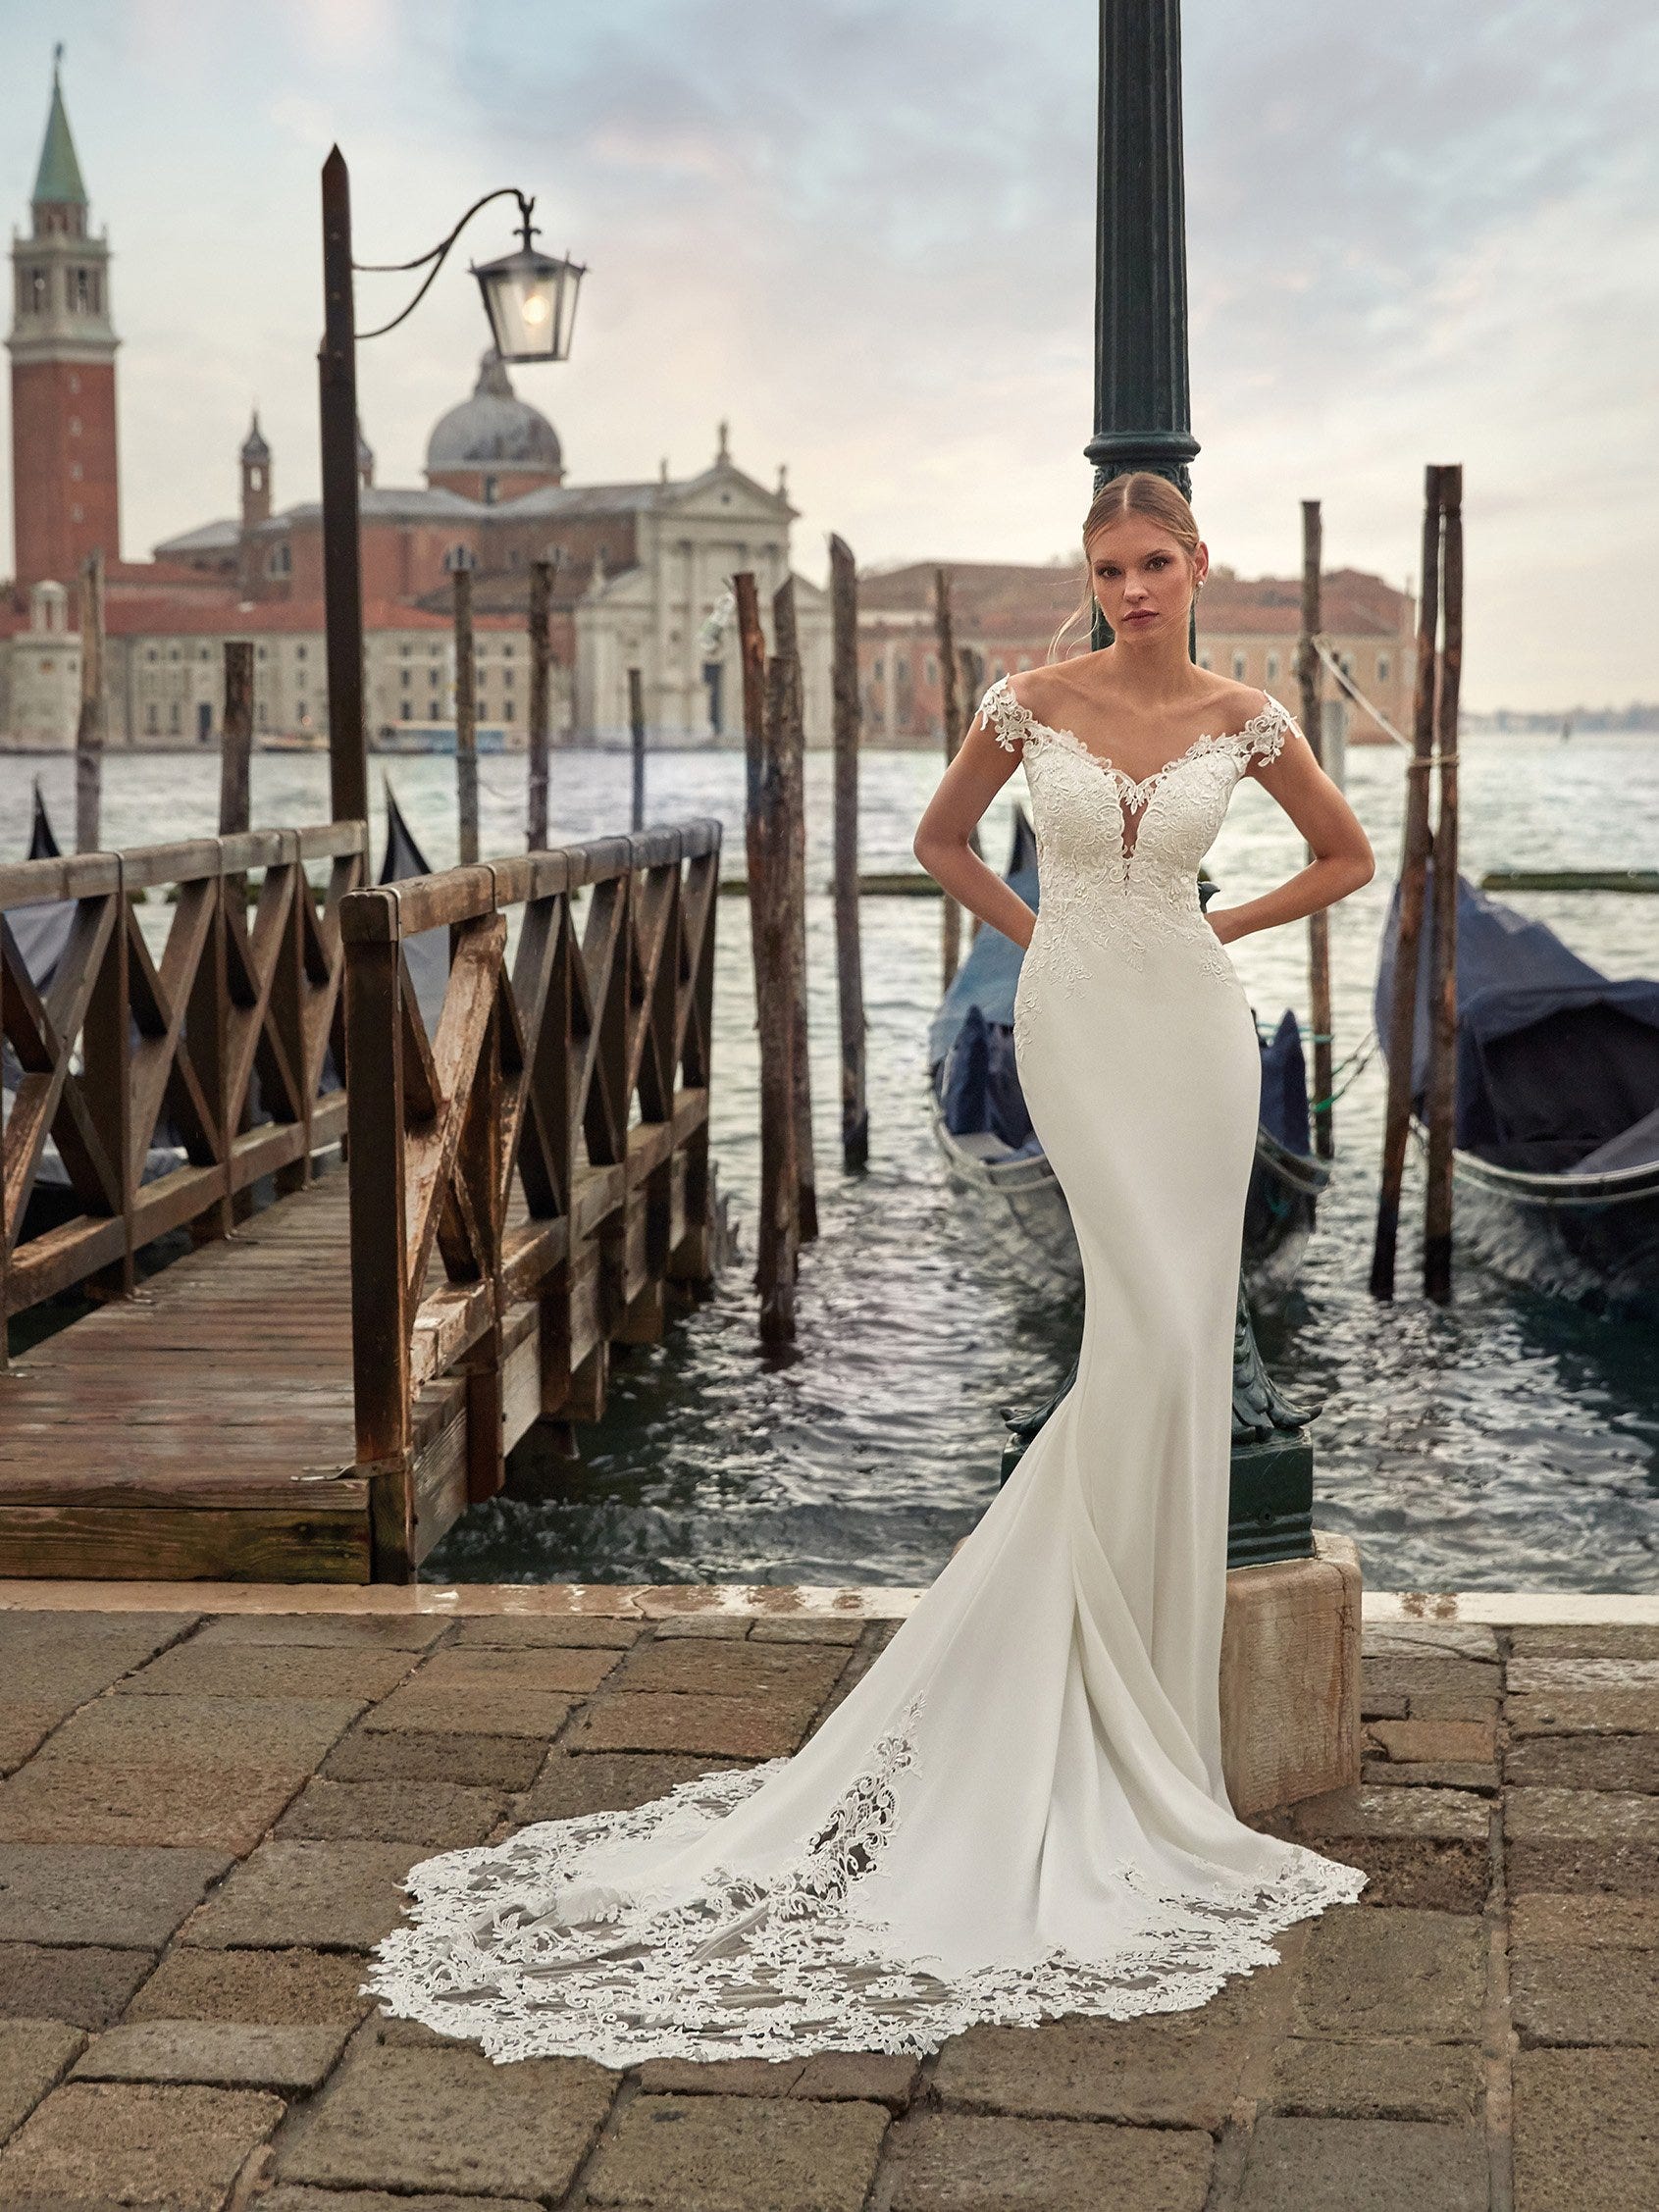 News: Looking for an eco-friendly wedding dress? Meet Susanne ...